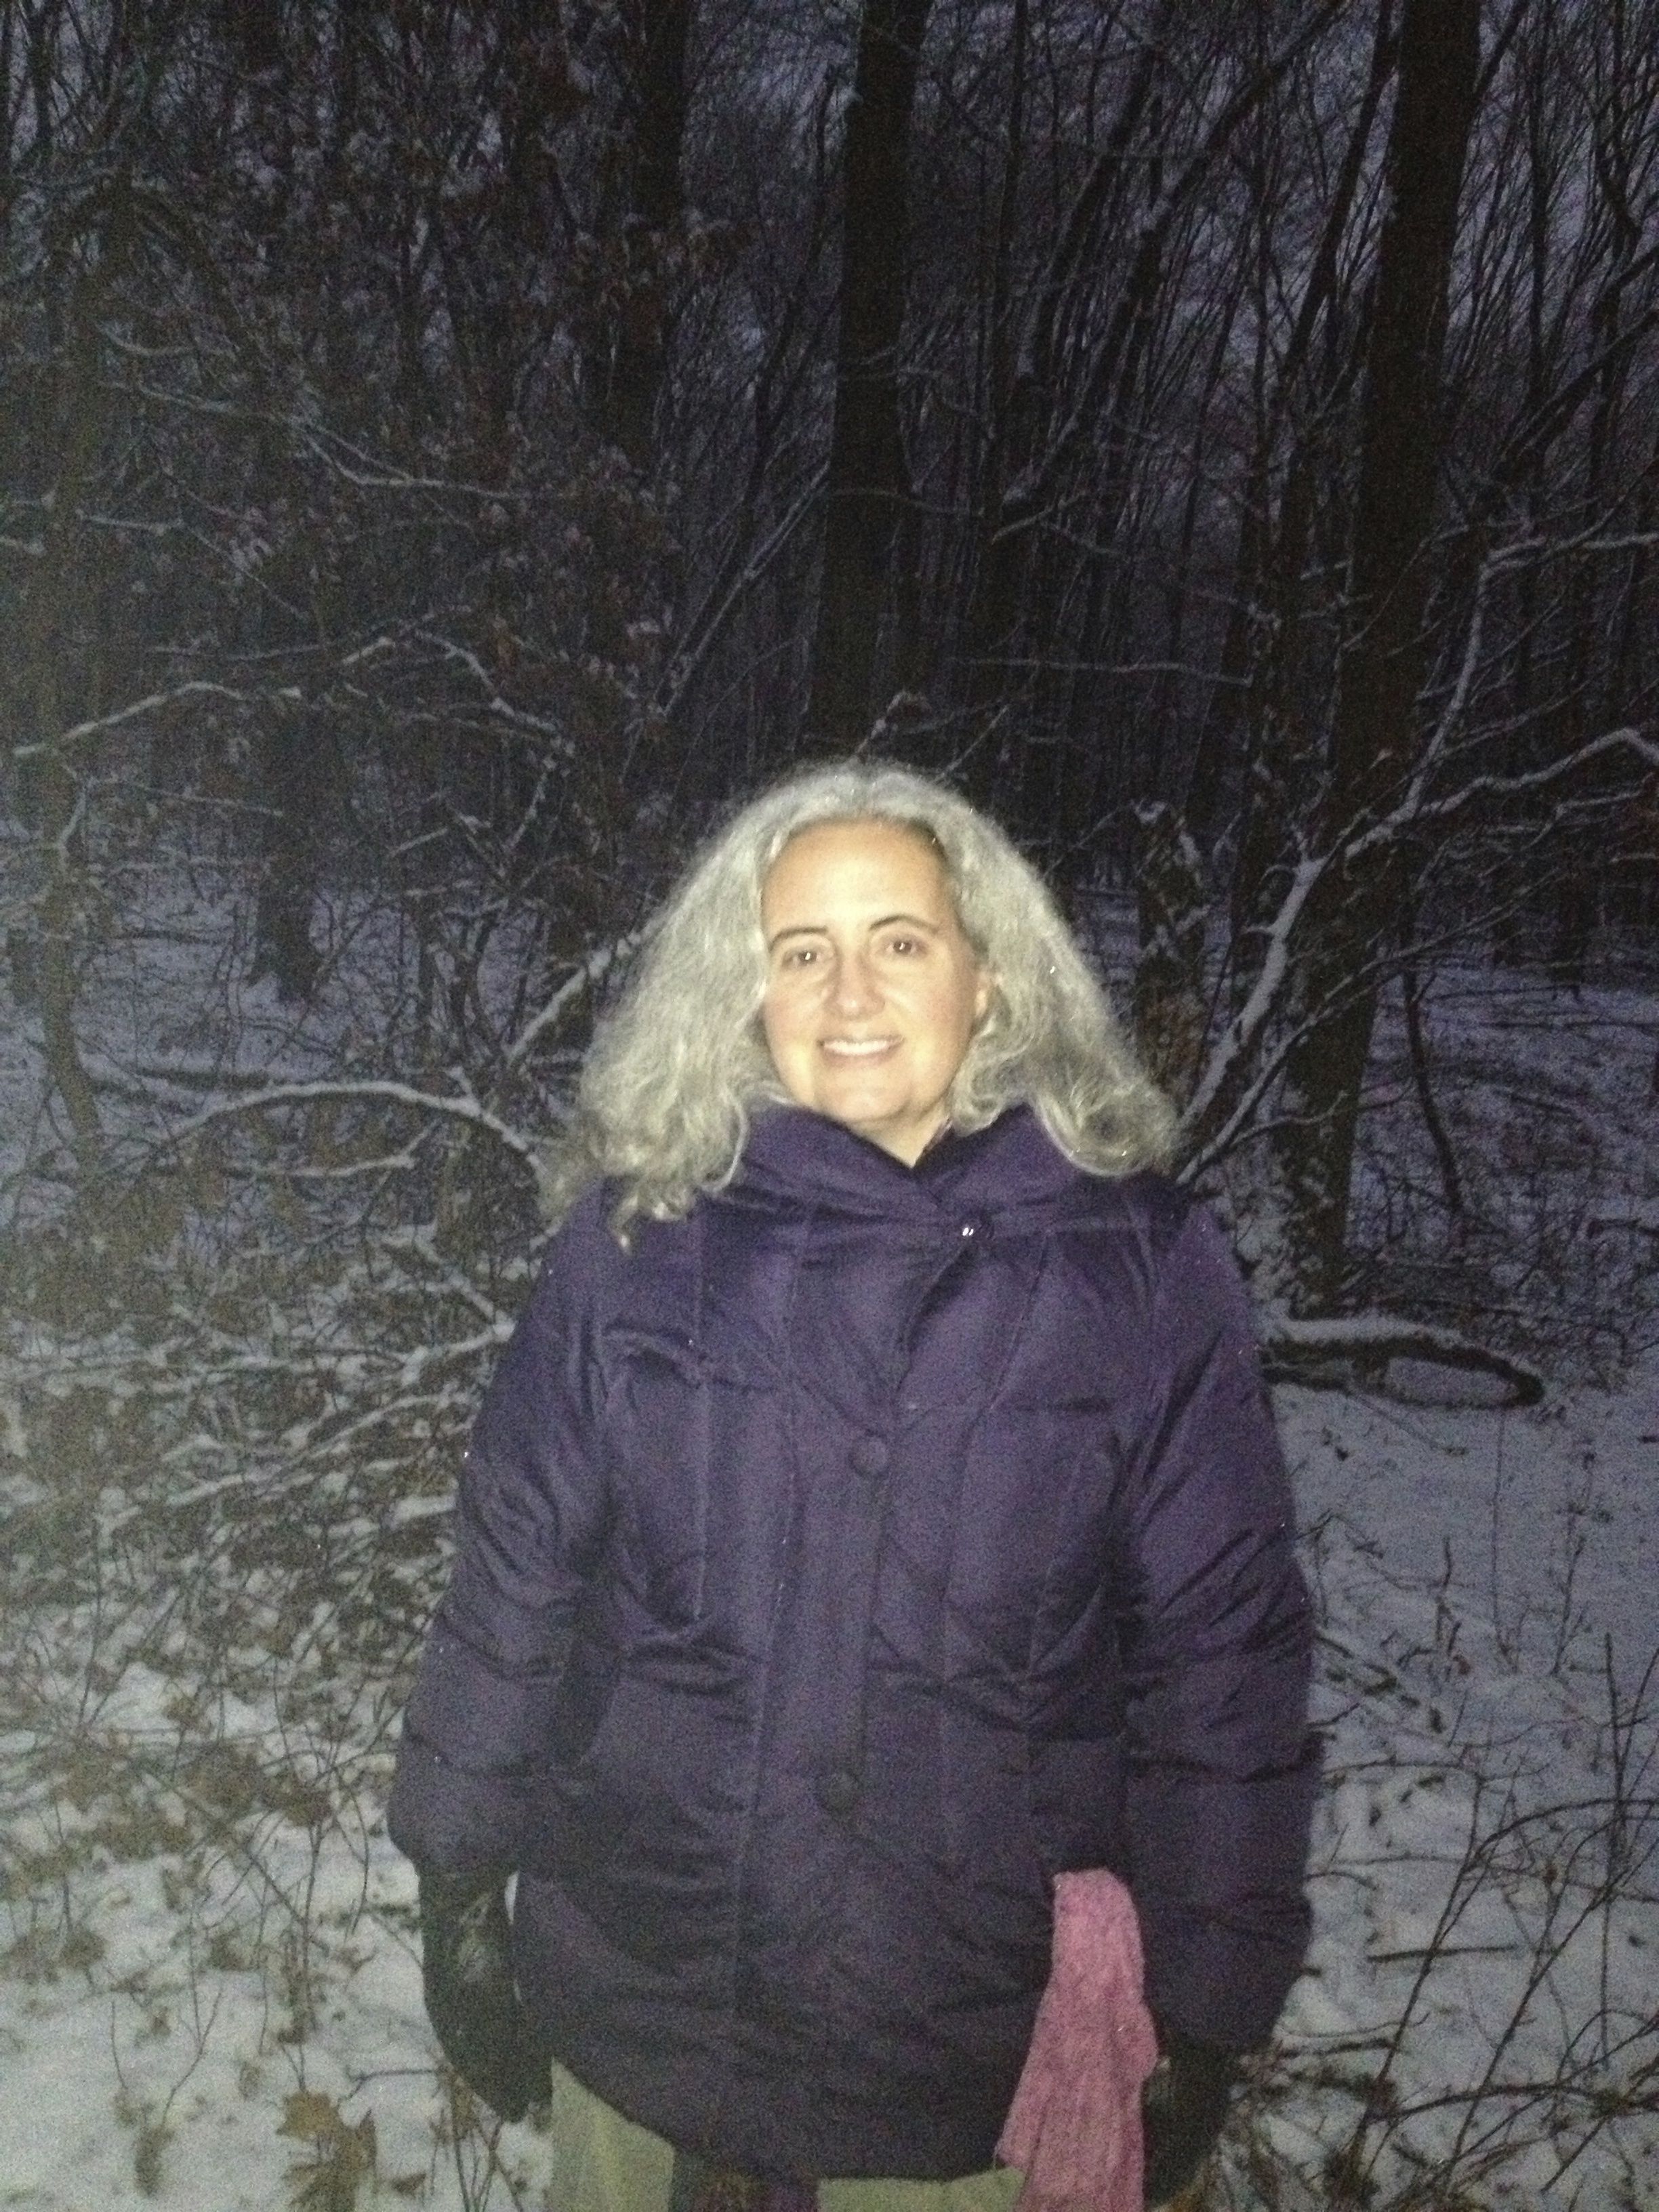 Deana Rogers walking by the snowy woods January 2013